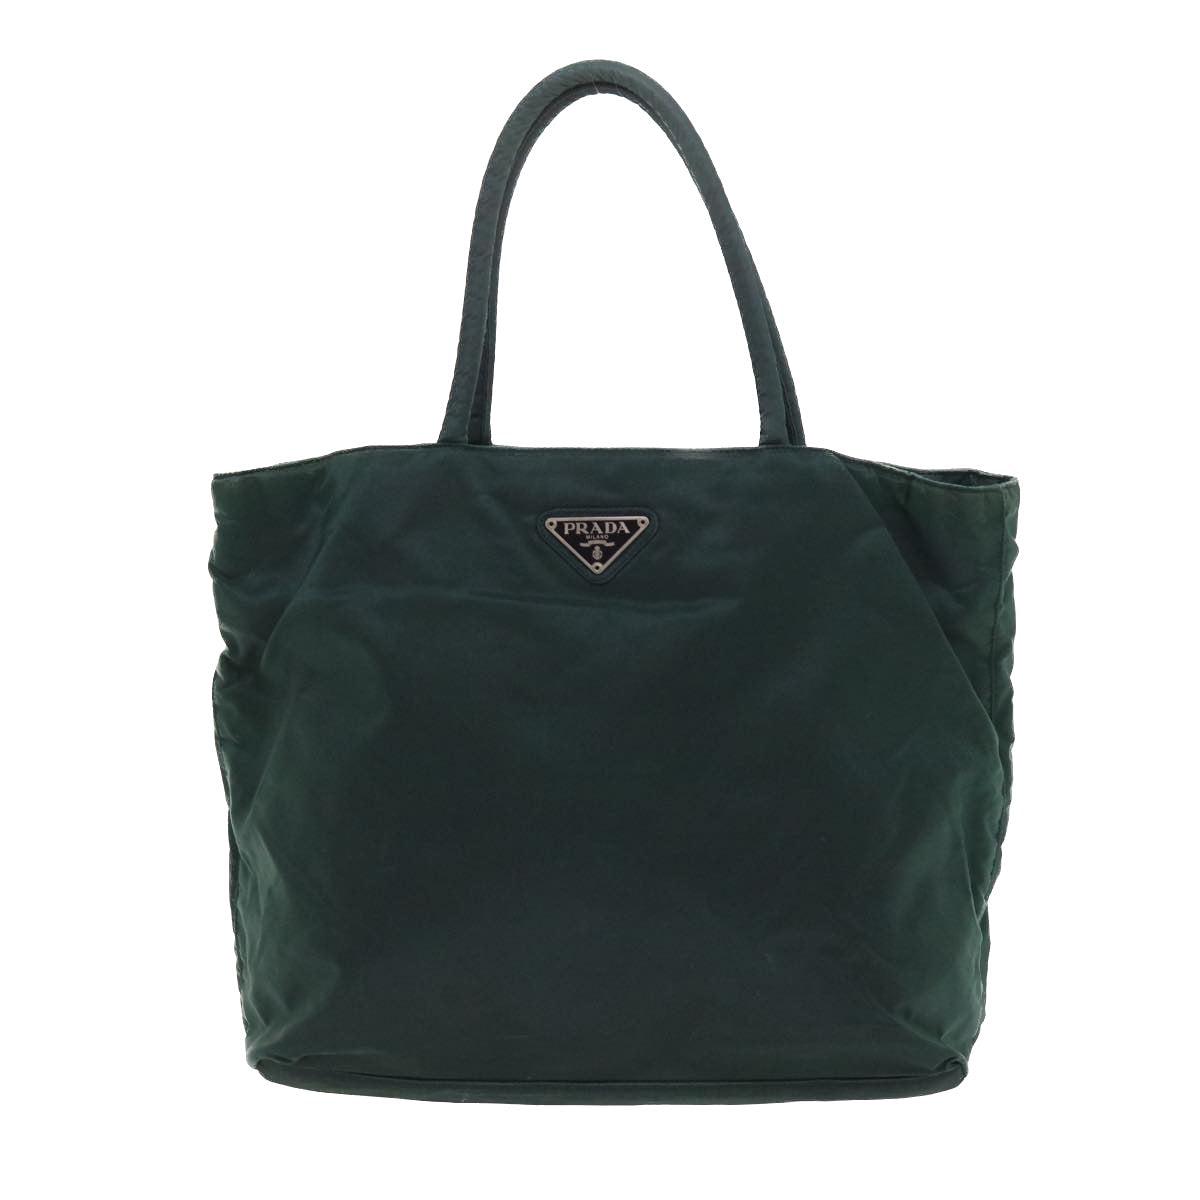 prada green leather handbag